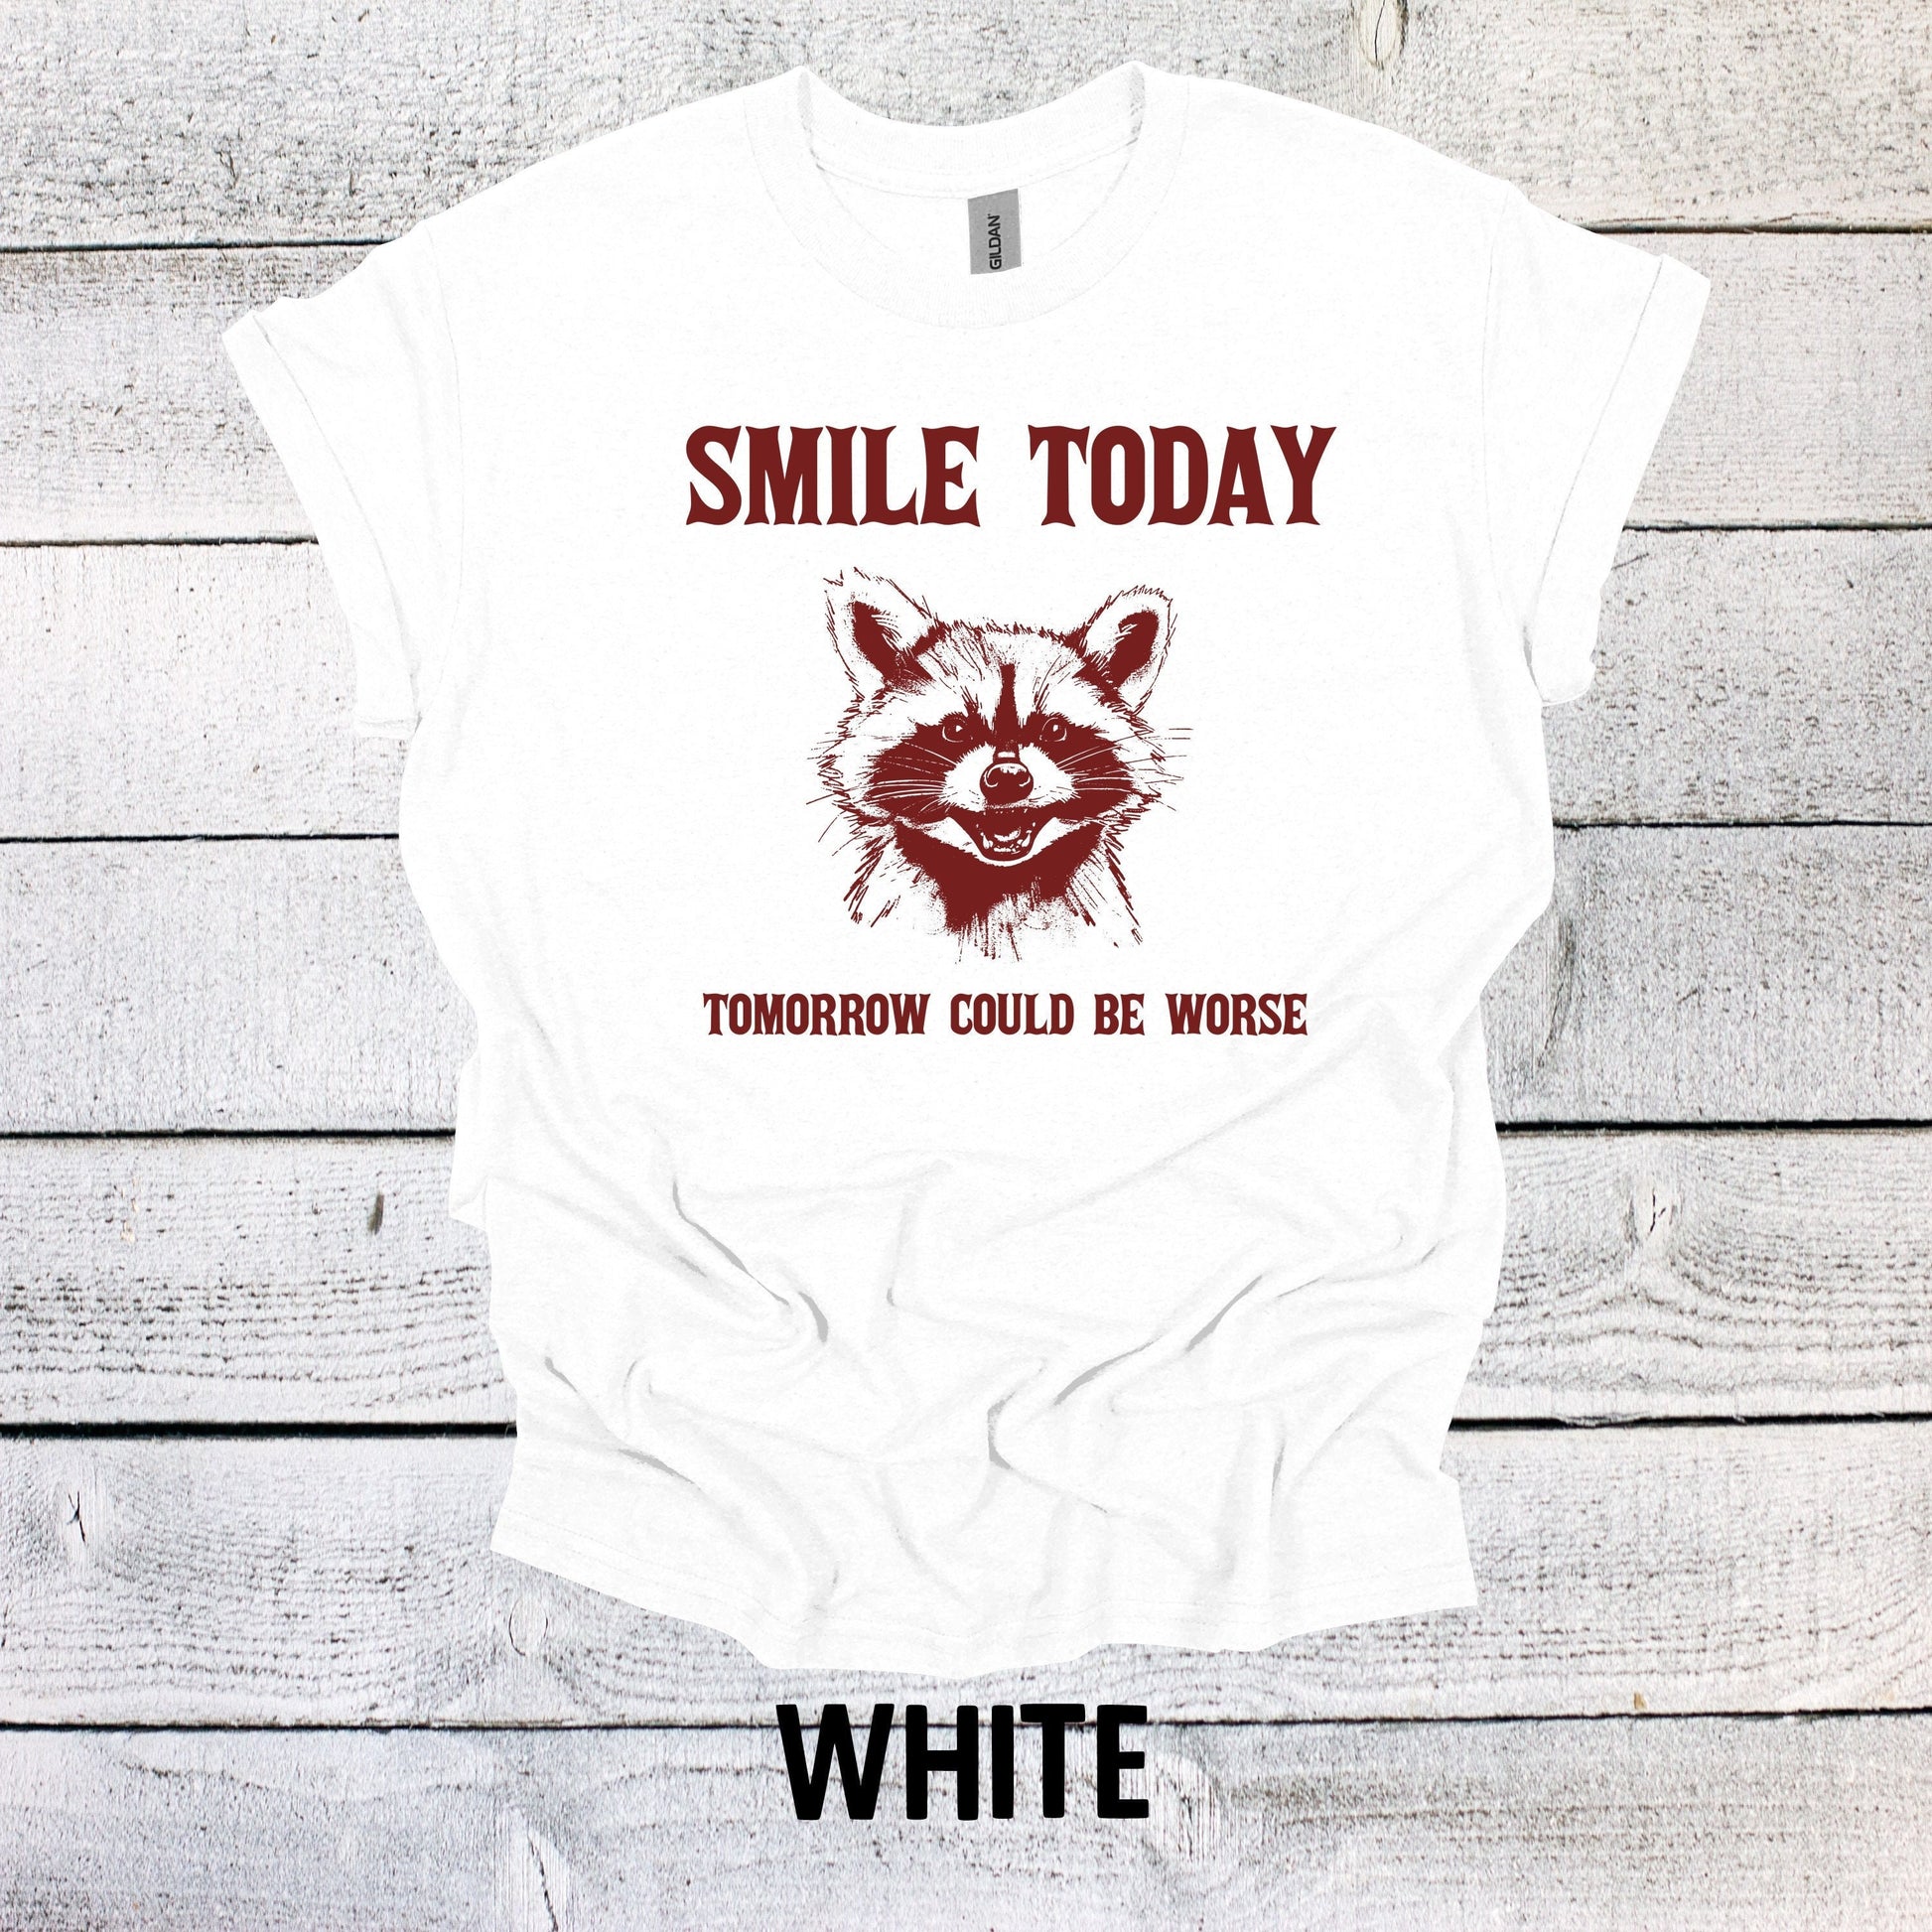 Smile Today Tomorrow Could Be Worse Shirt, Raccoon Shirt, Graphic Shirt Vintage Funny Shirt Nostalgia Shirt Cotton Shirt Minimalist Shirt